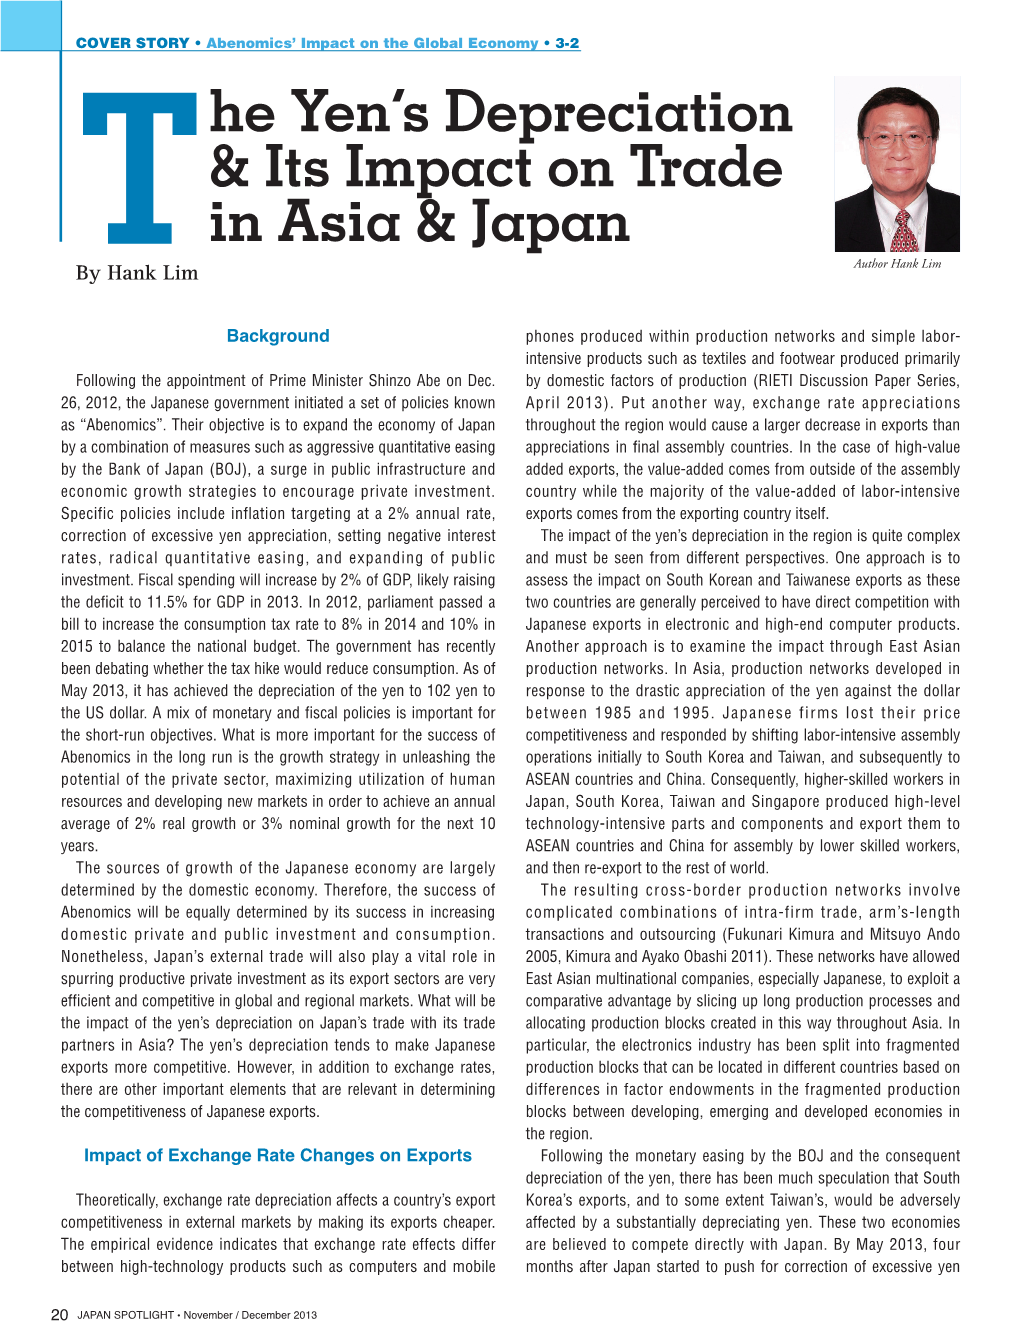 He Yen's Depreciation & Its Impact on Trade in Asia & Japan